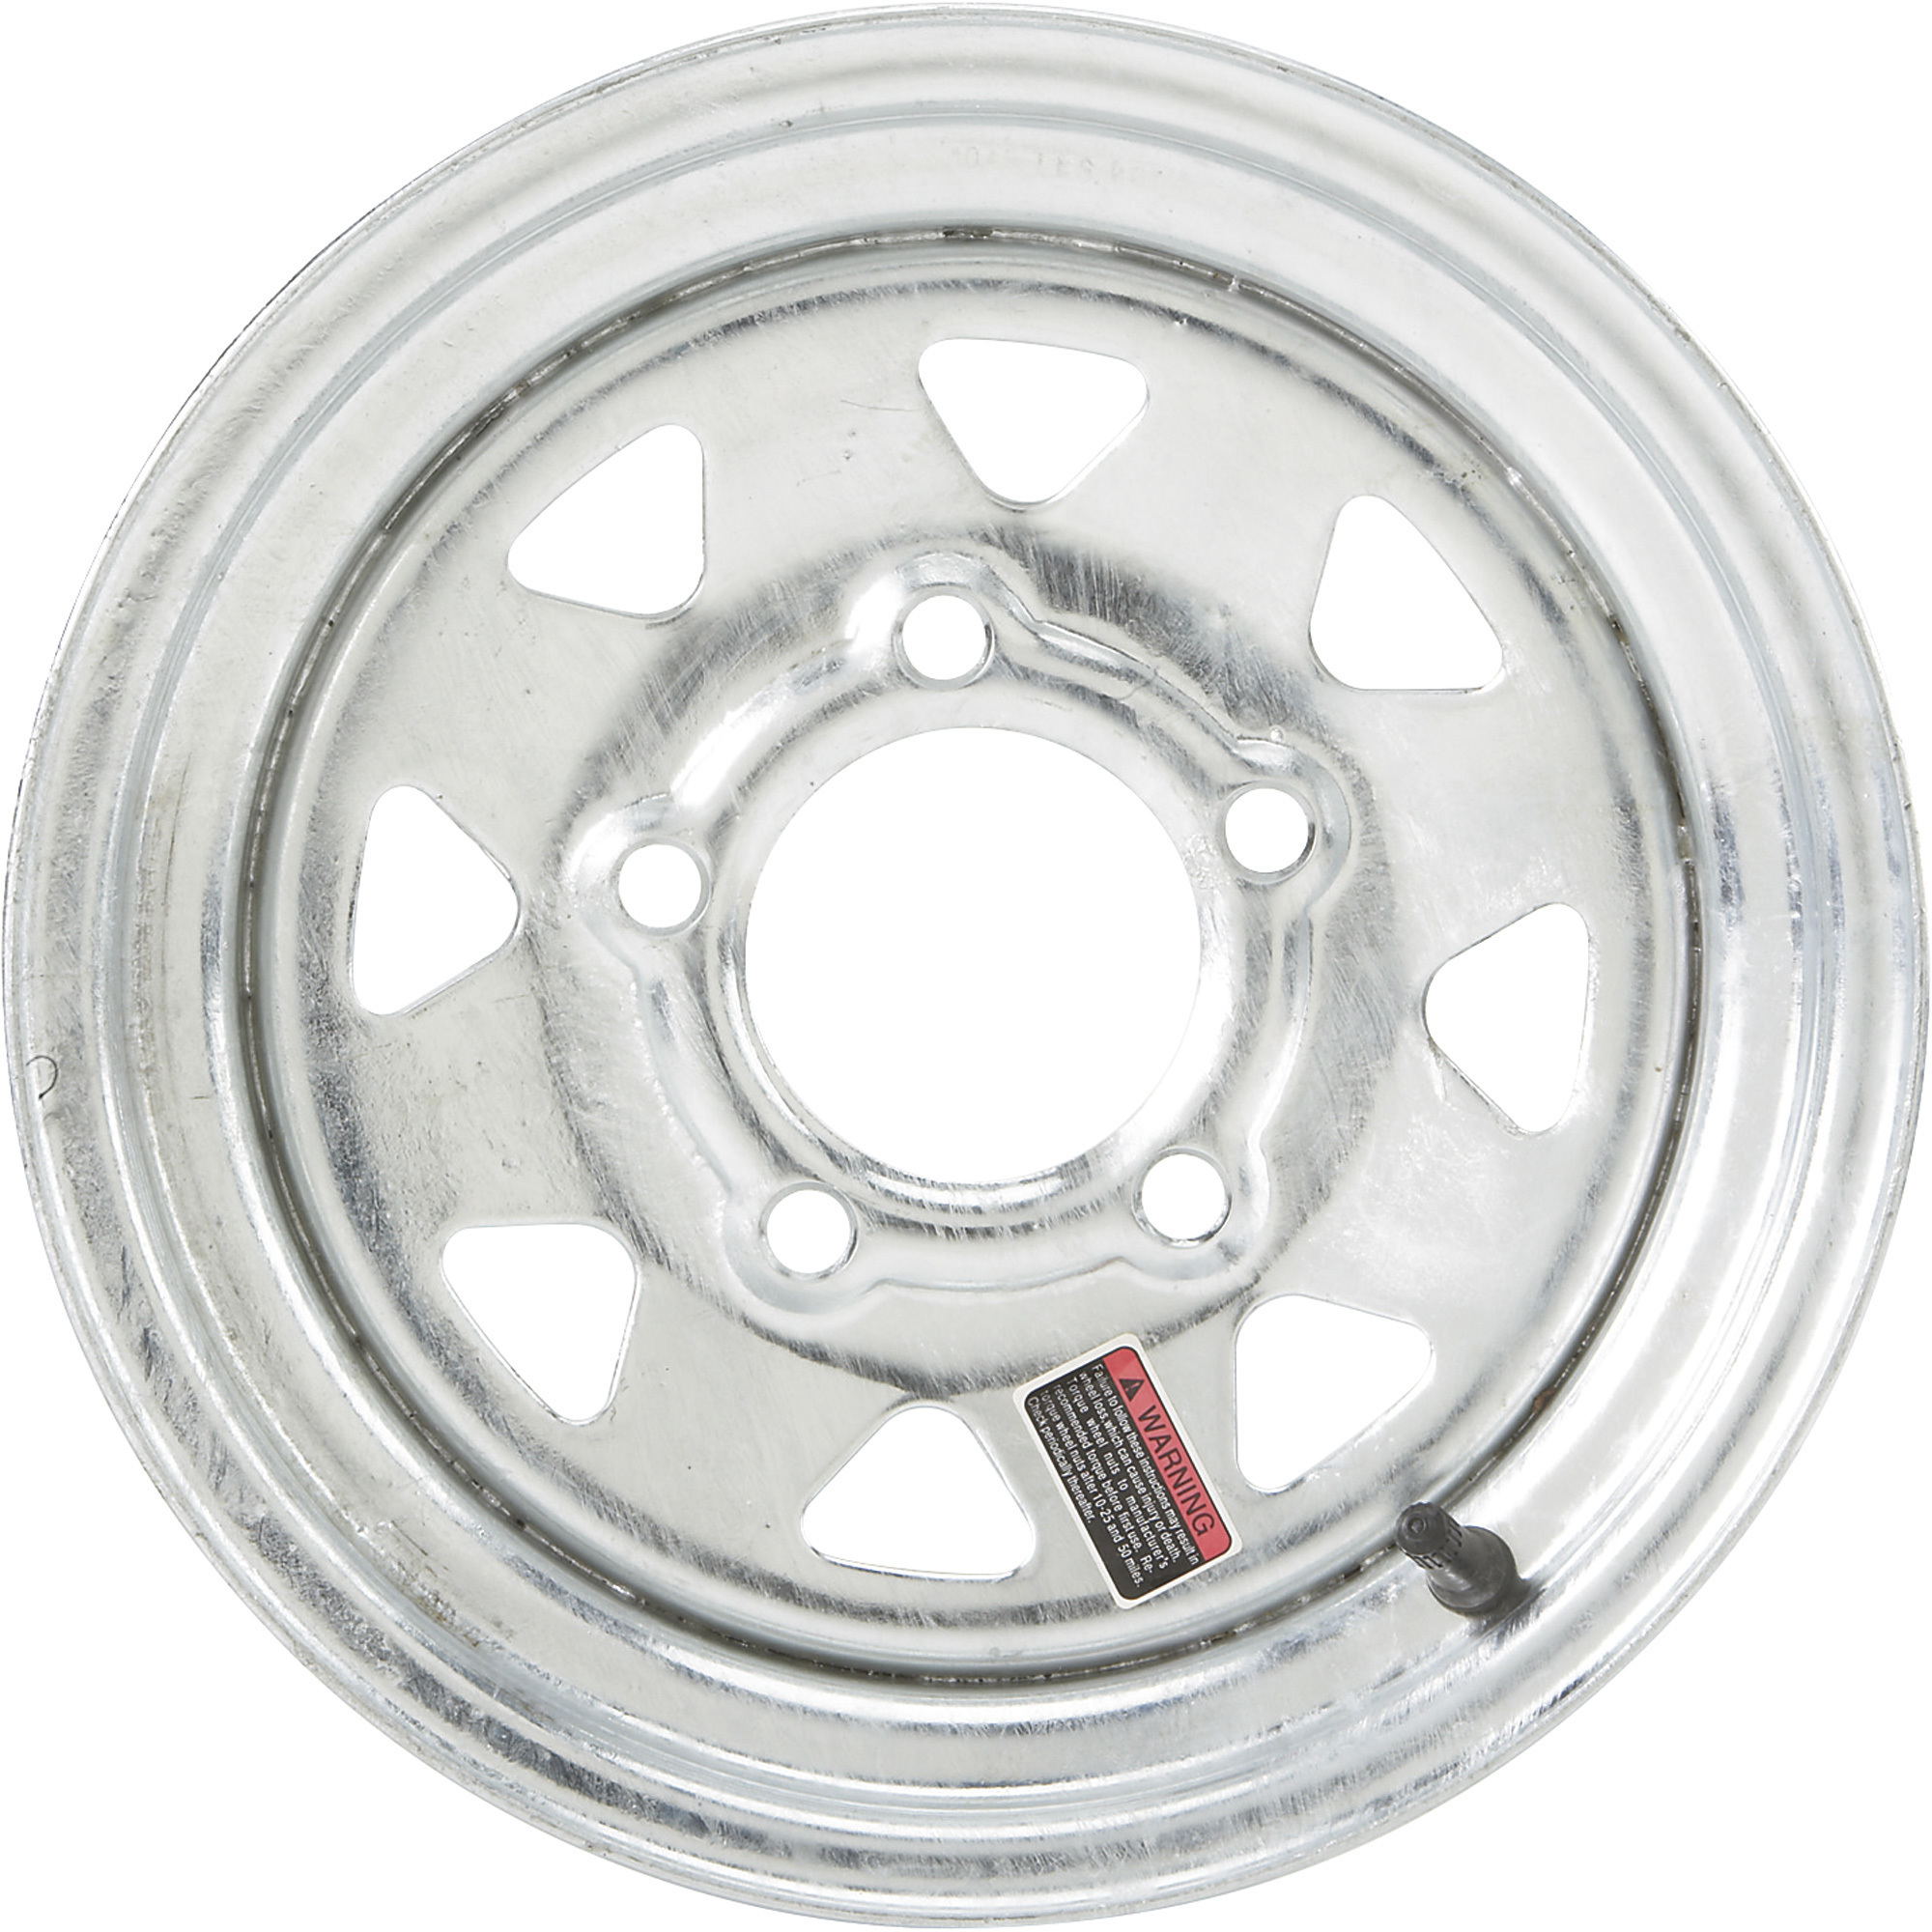 Martin Wheel 12Inch Spoked Trailer Tire Wheel â Rim Only, Fits Tire Sizes 4.80 x 12, 5.30 x 12, 5-Hole, Model R-125S-G-VN